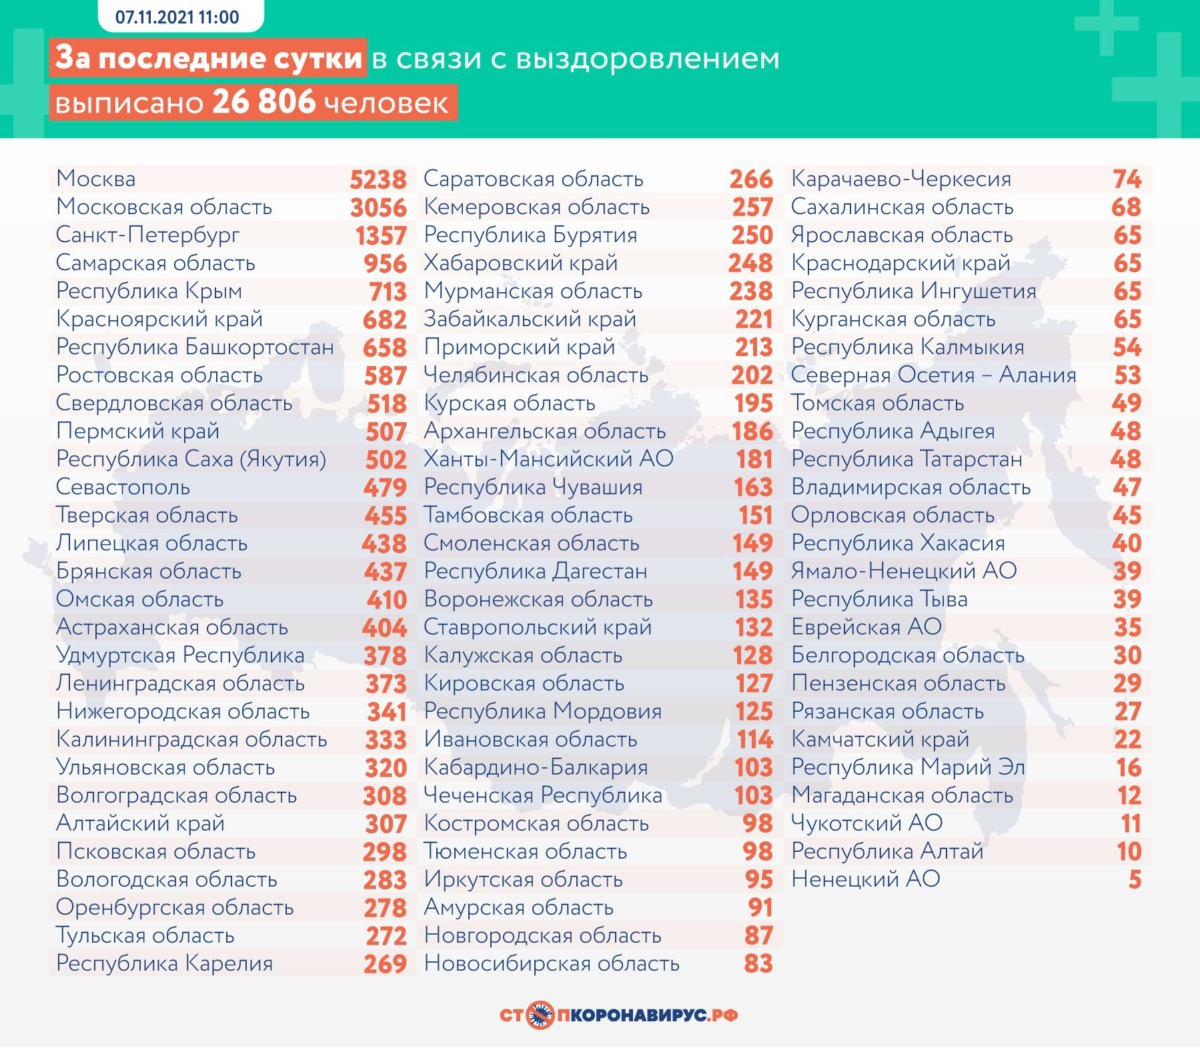 Оперативная статистика по коронавирусу в России на 7 ноября